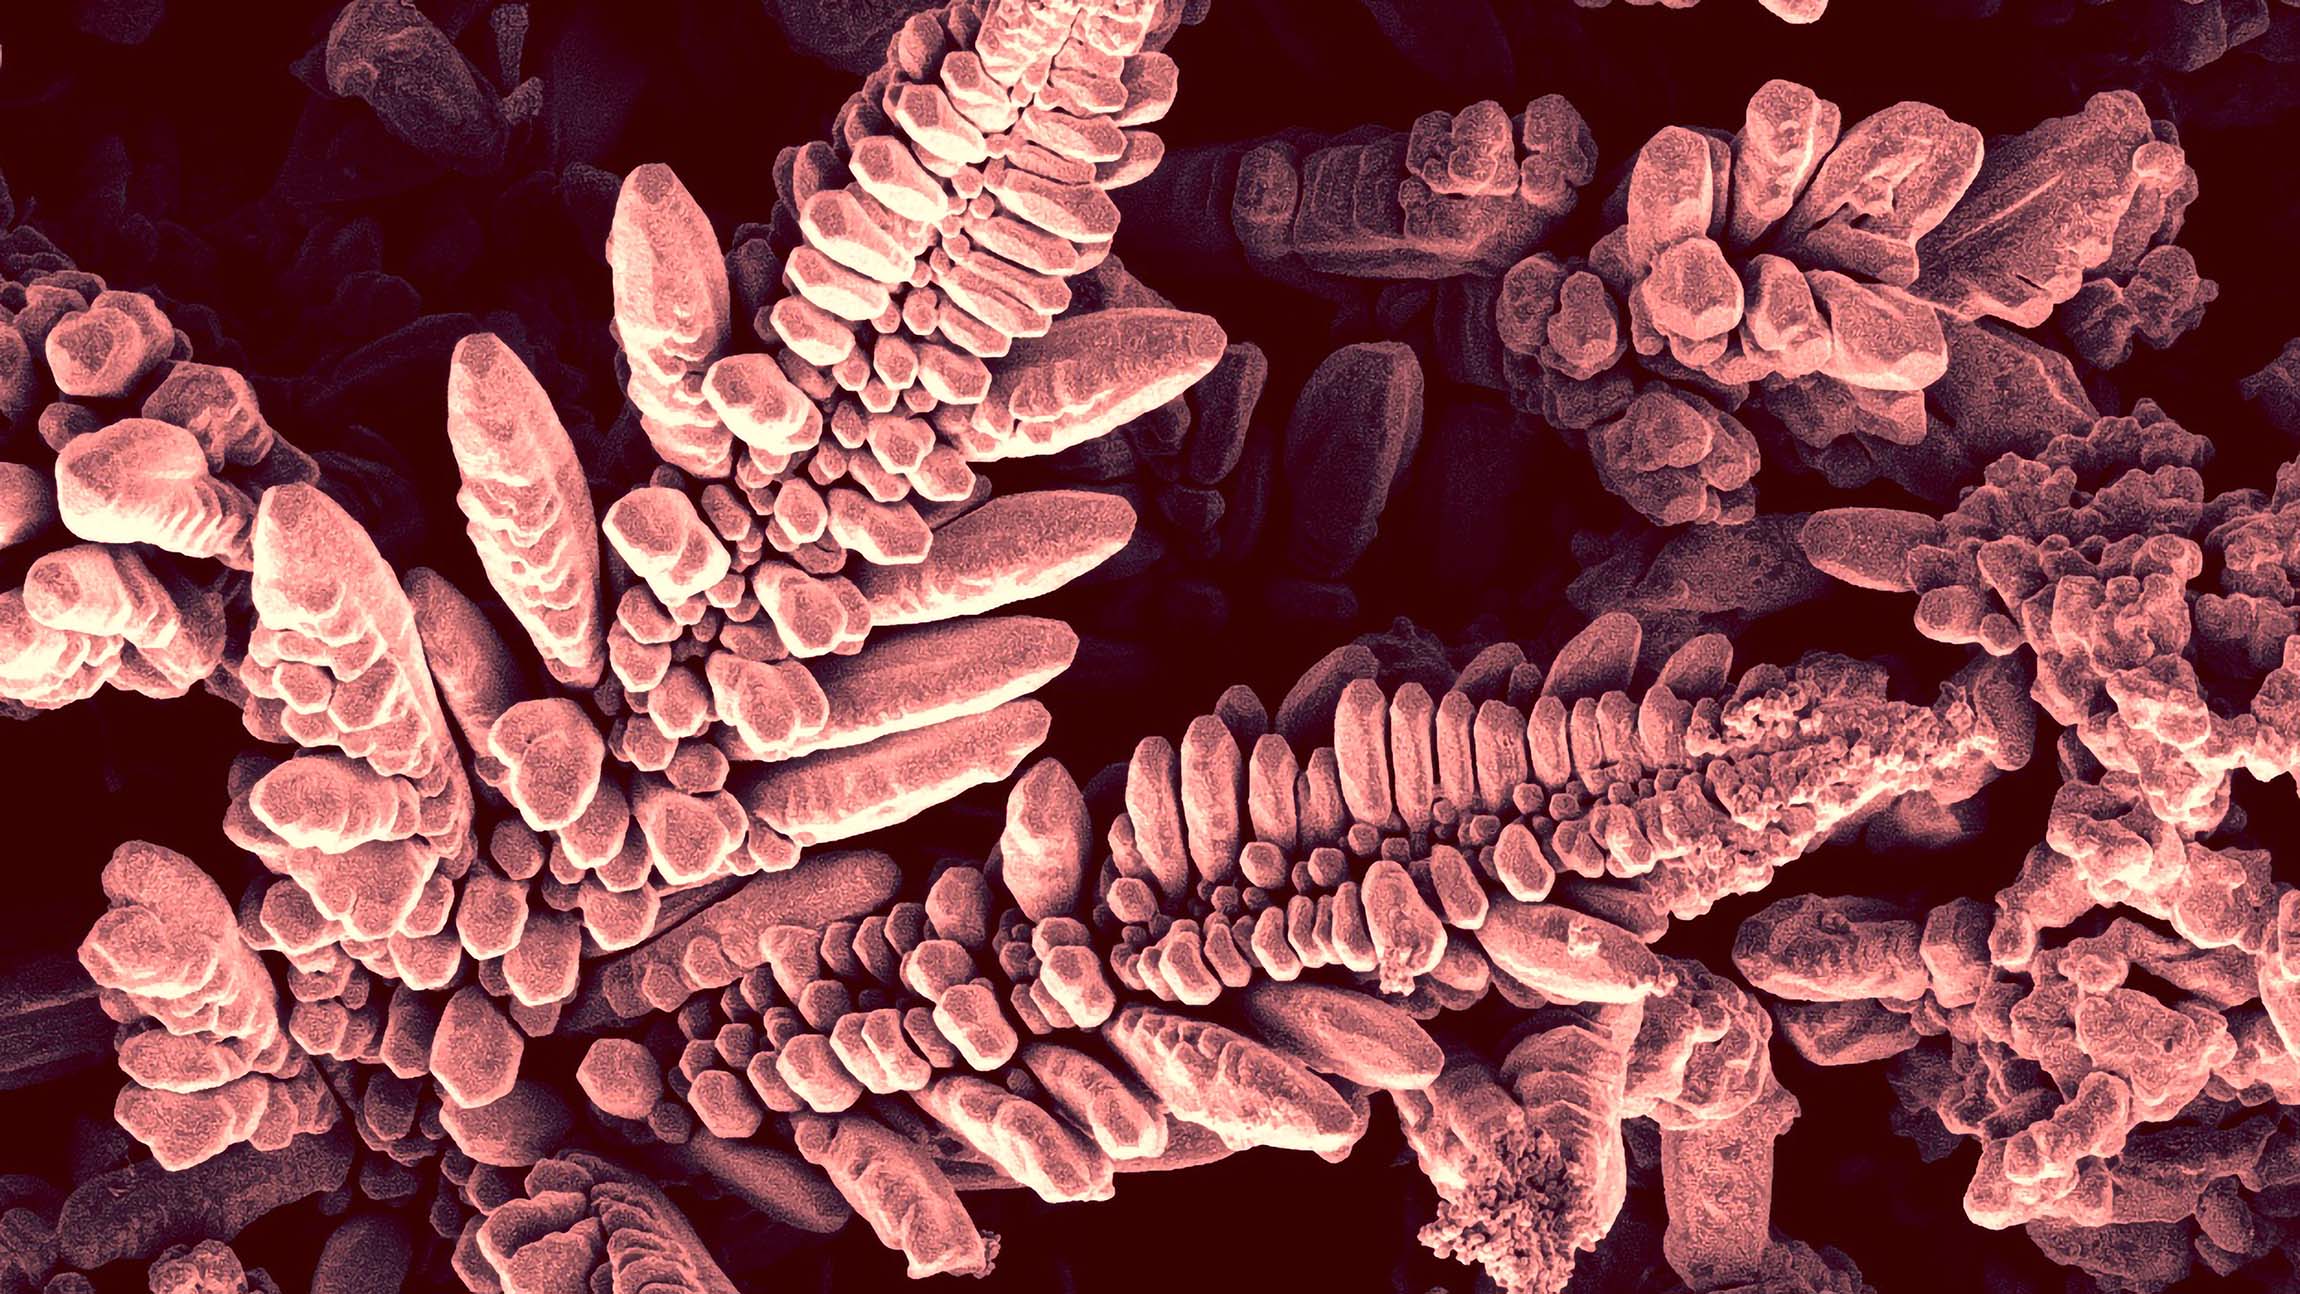 award-winning photo of copper under a powerful microscope